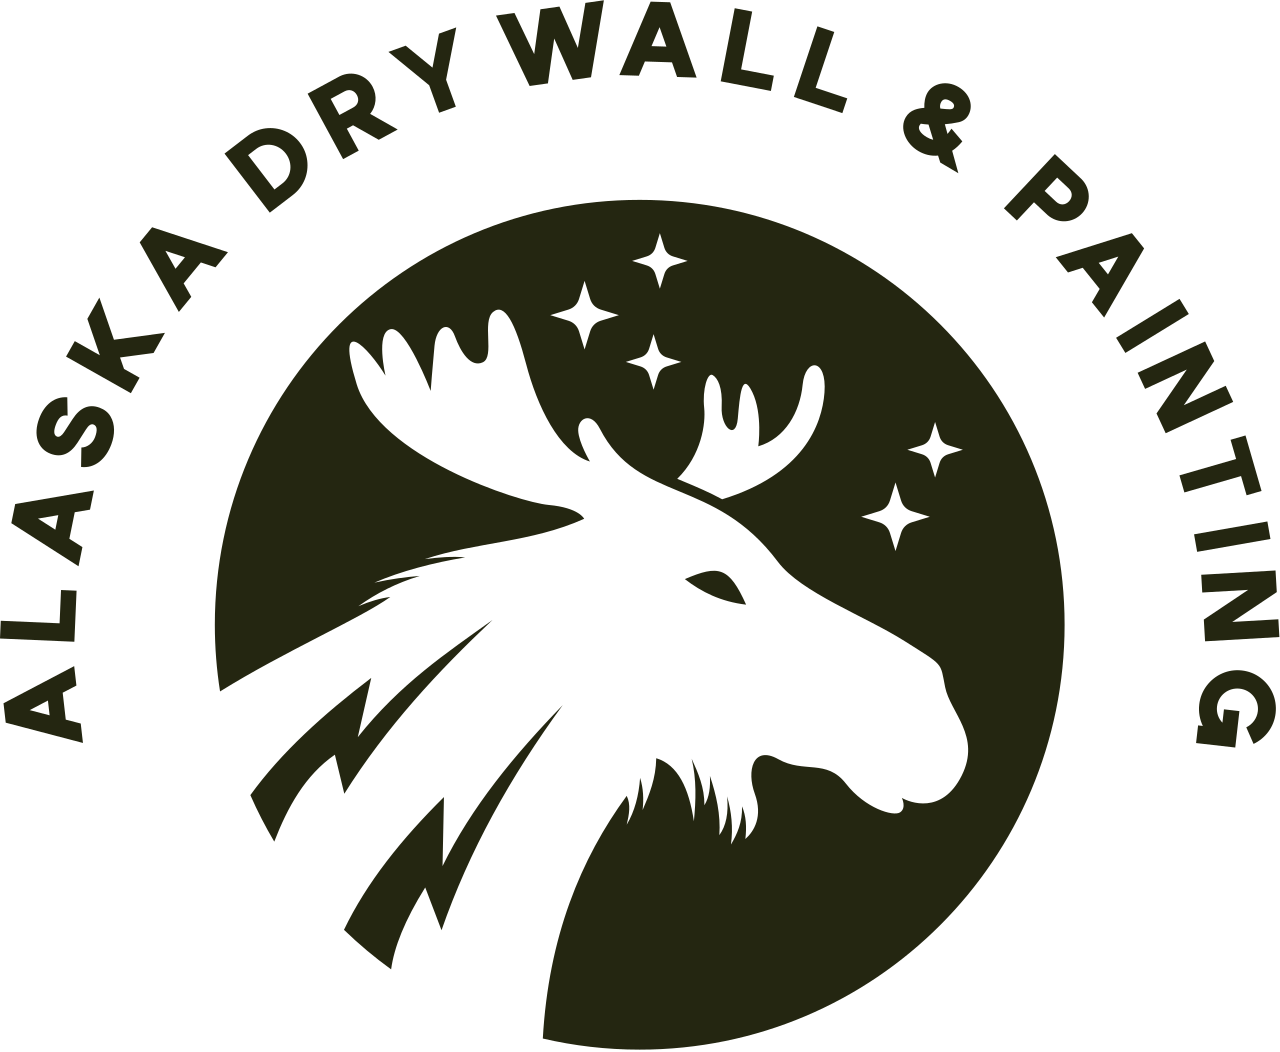 Alaska drywall & painting's logo